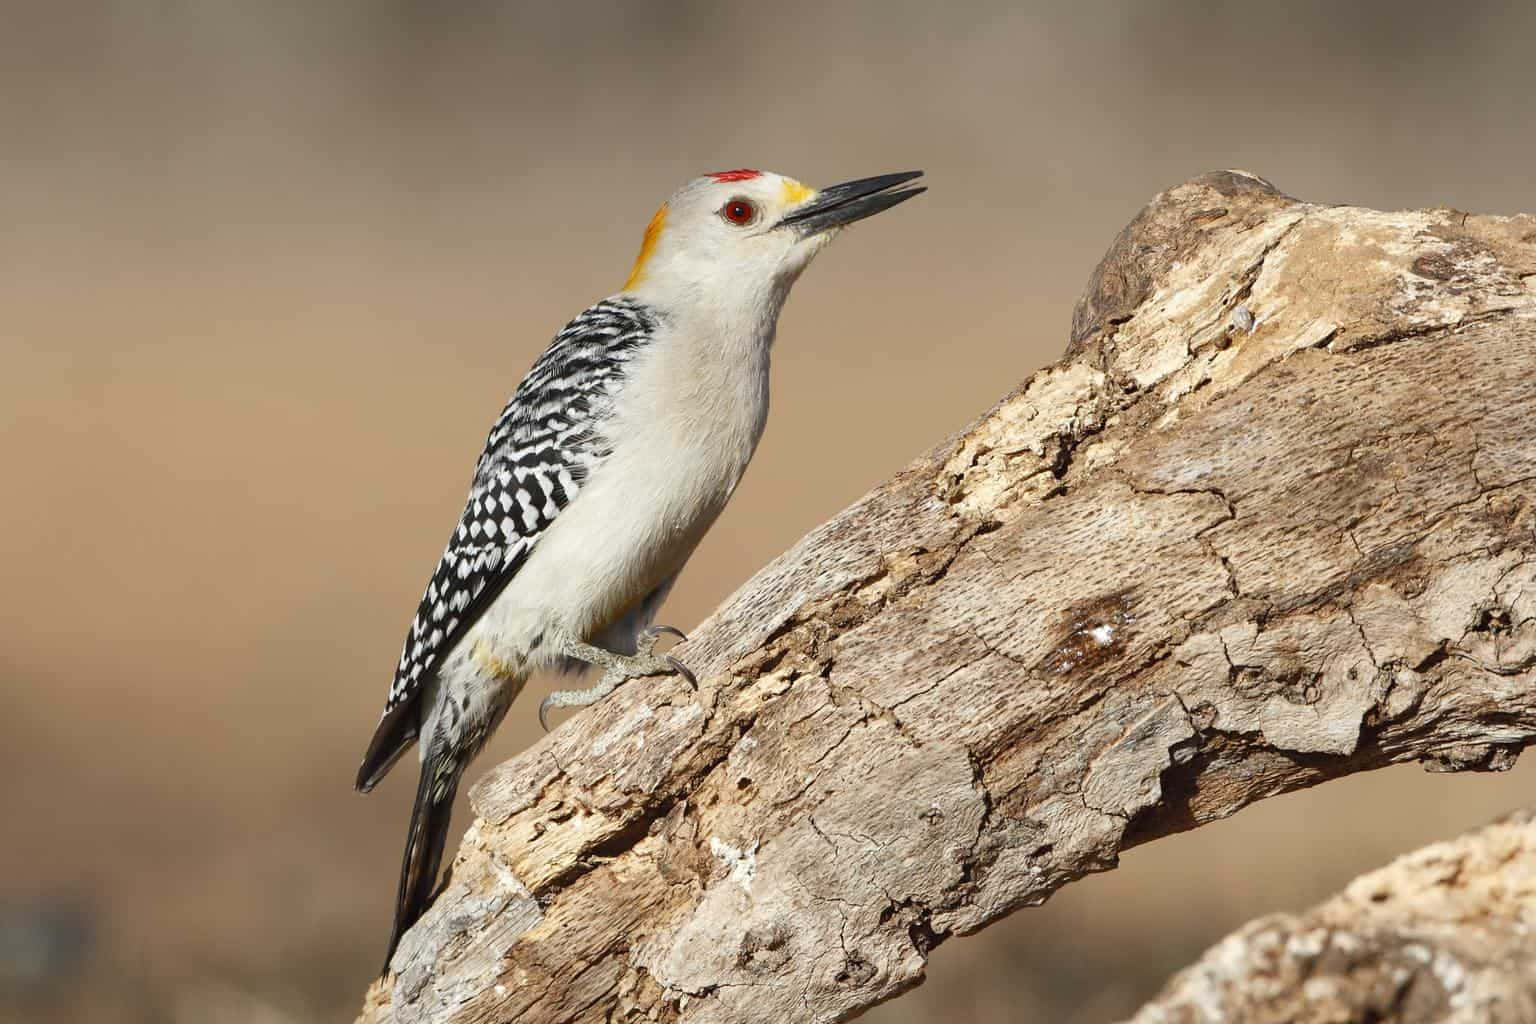 Woodpecker Applying Its Natural Talents"